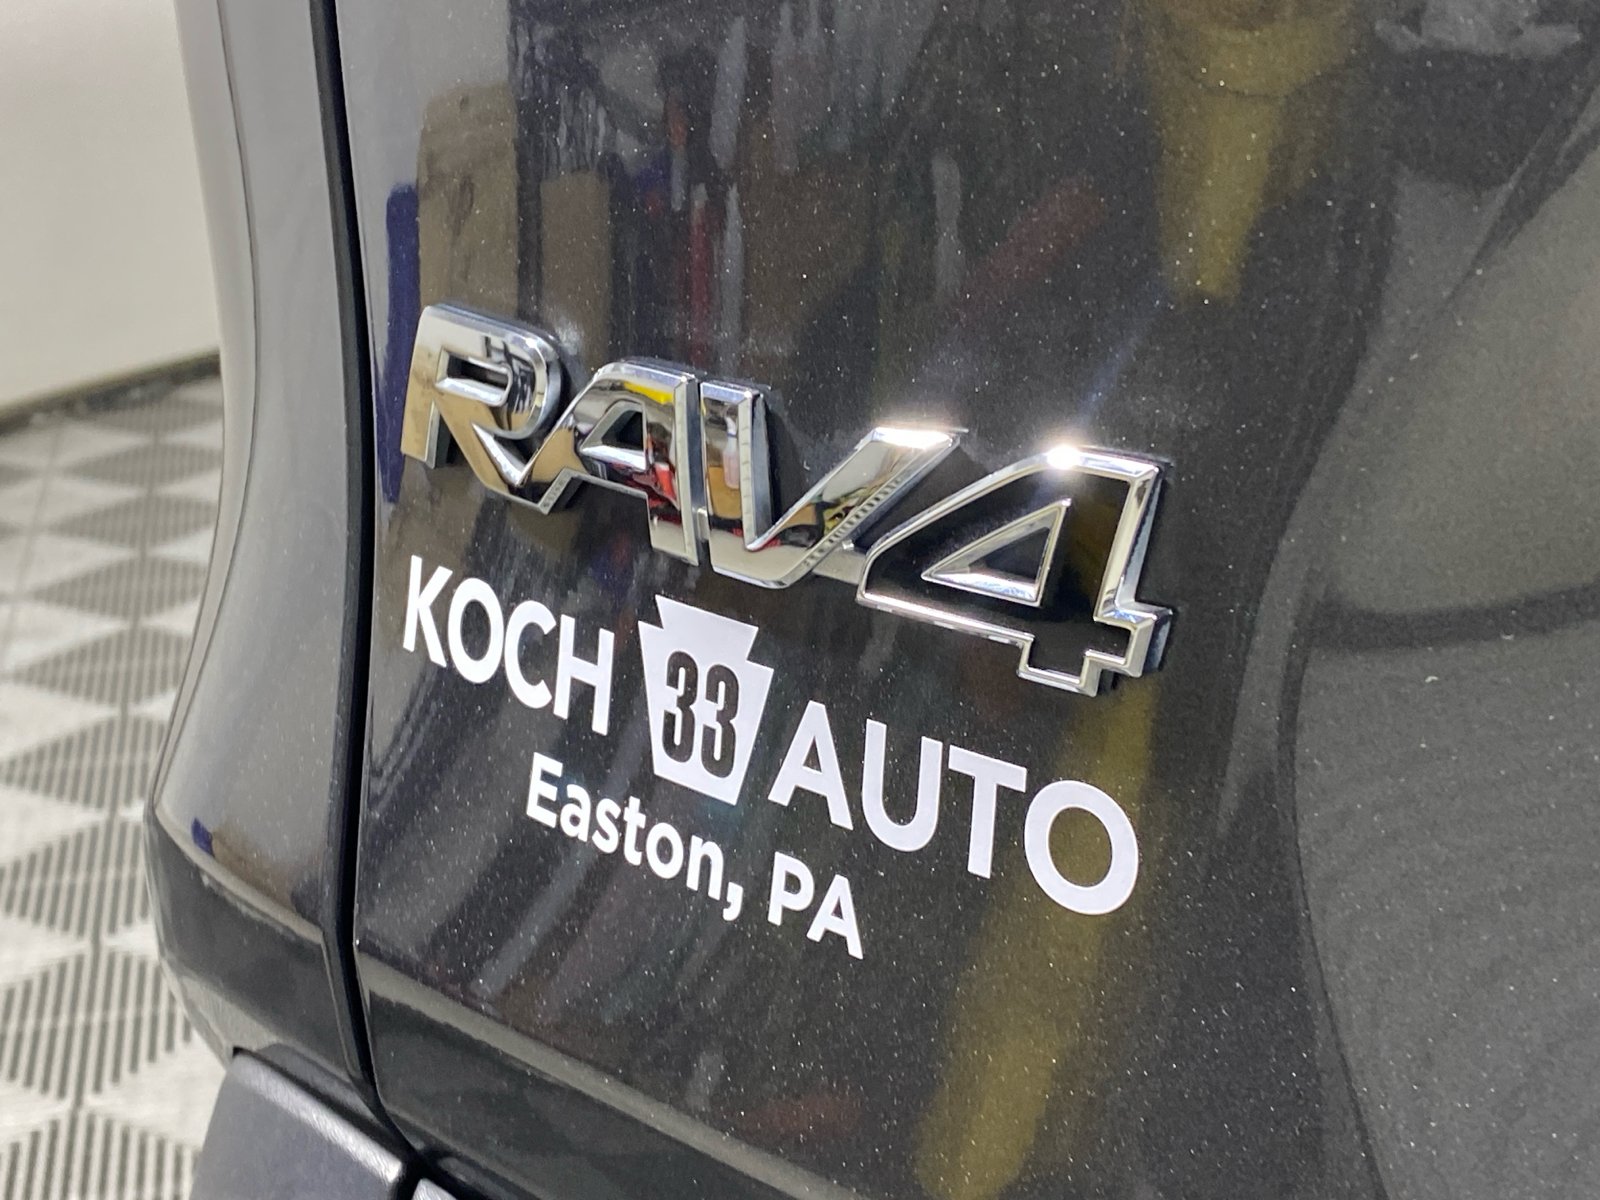 2021 Toyota RAV4 XLE 9